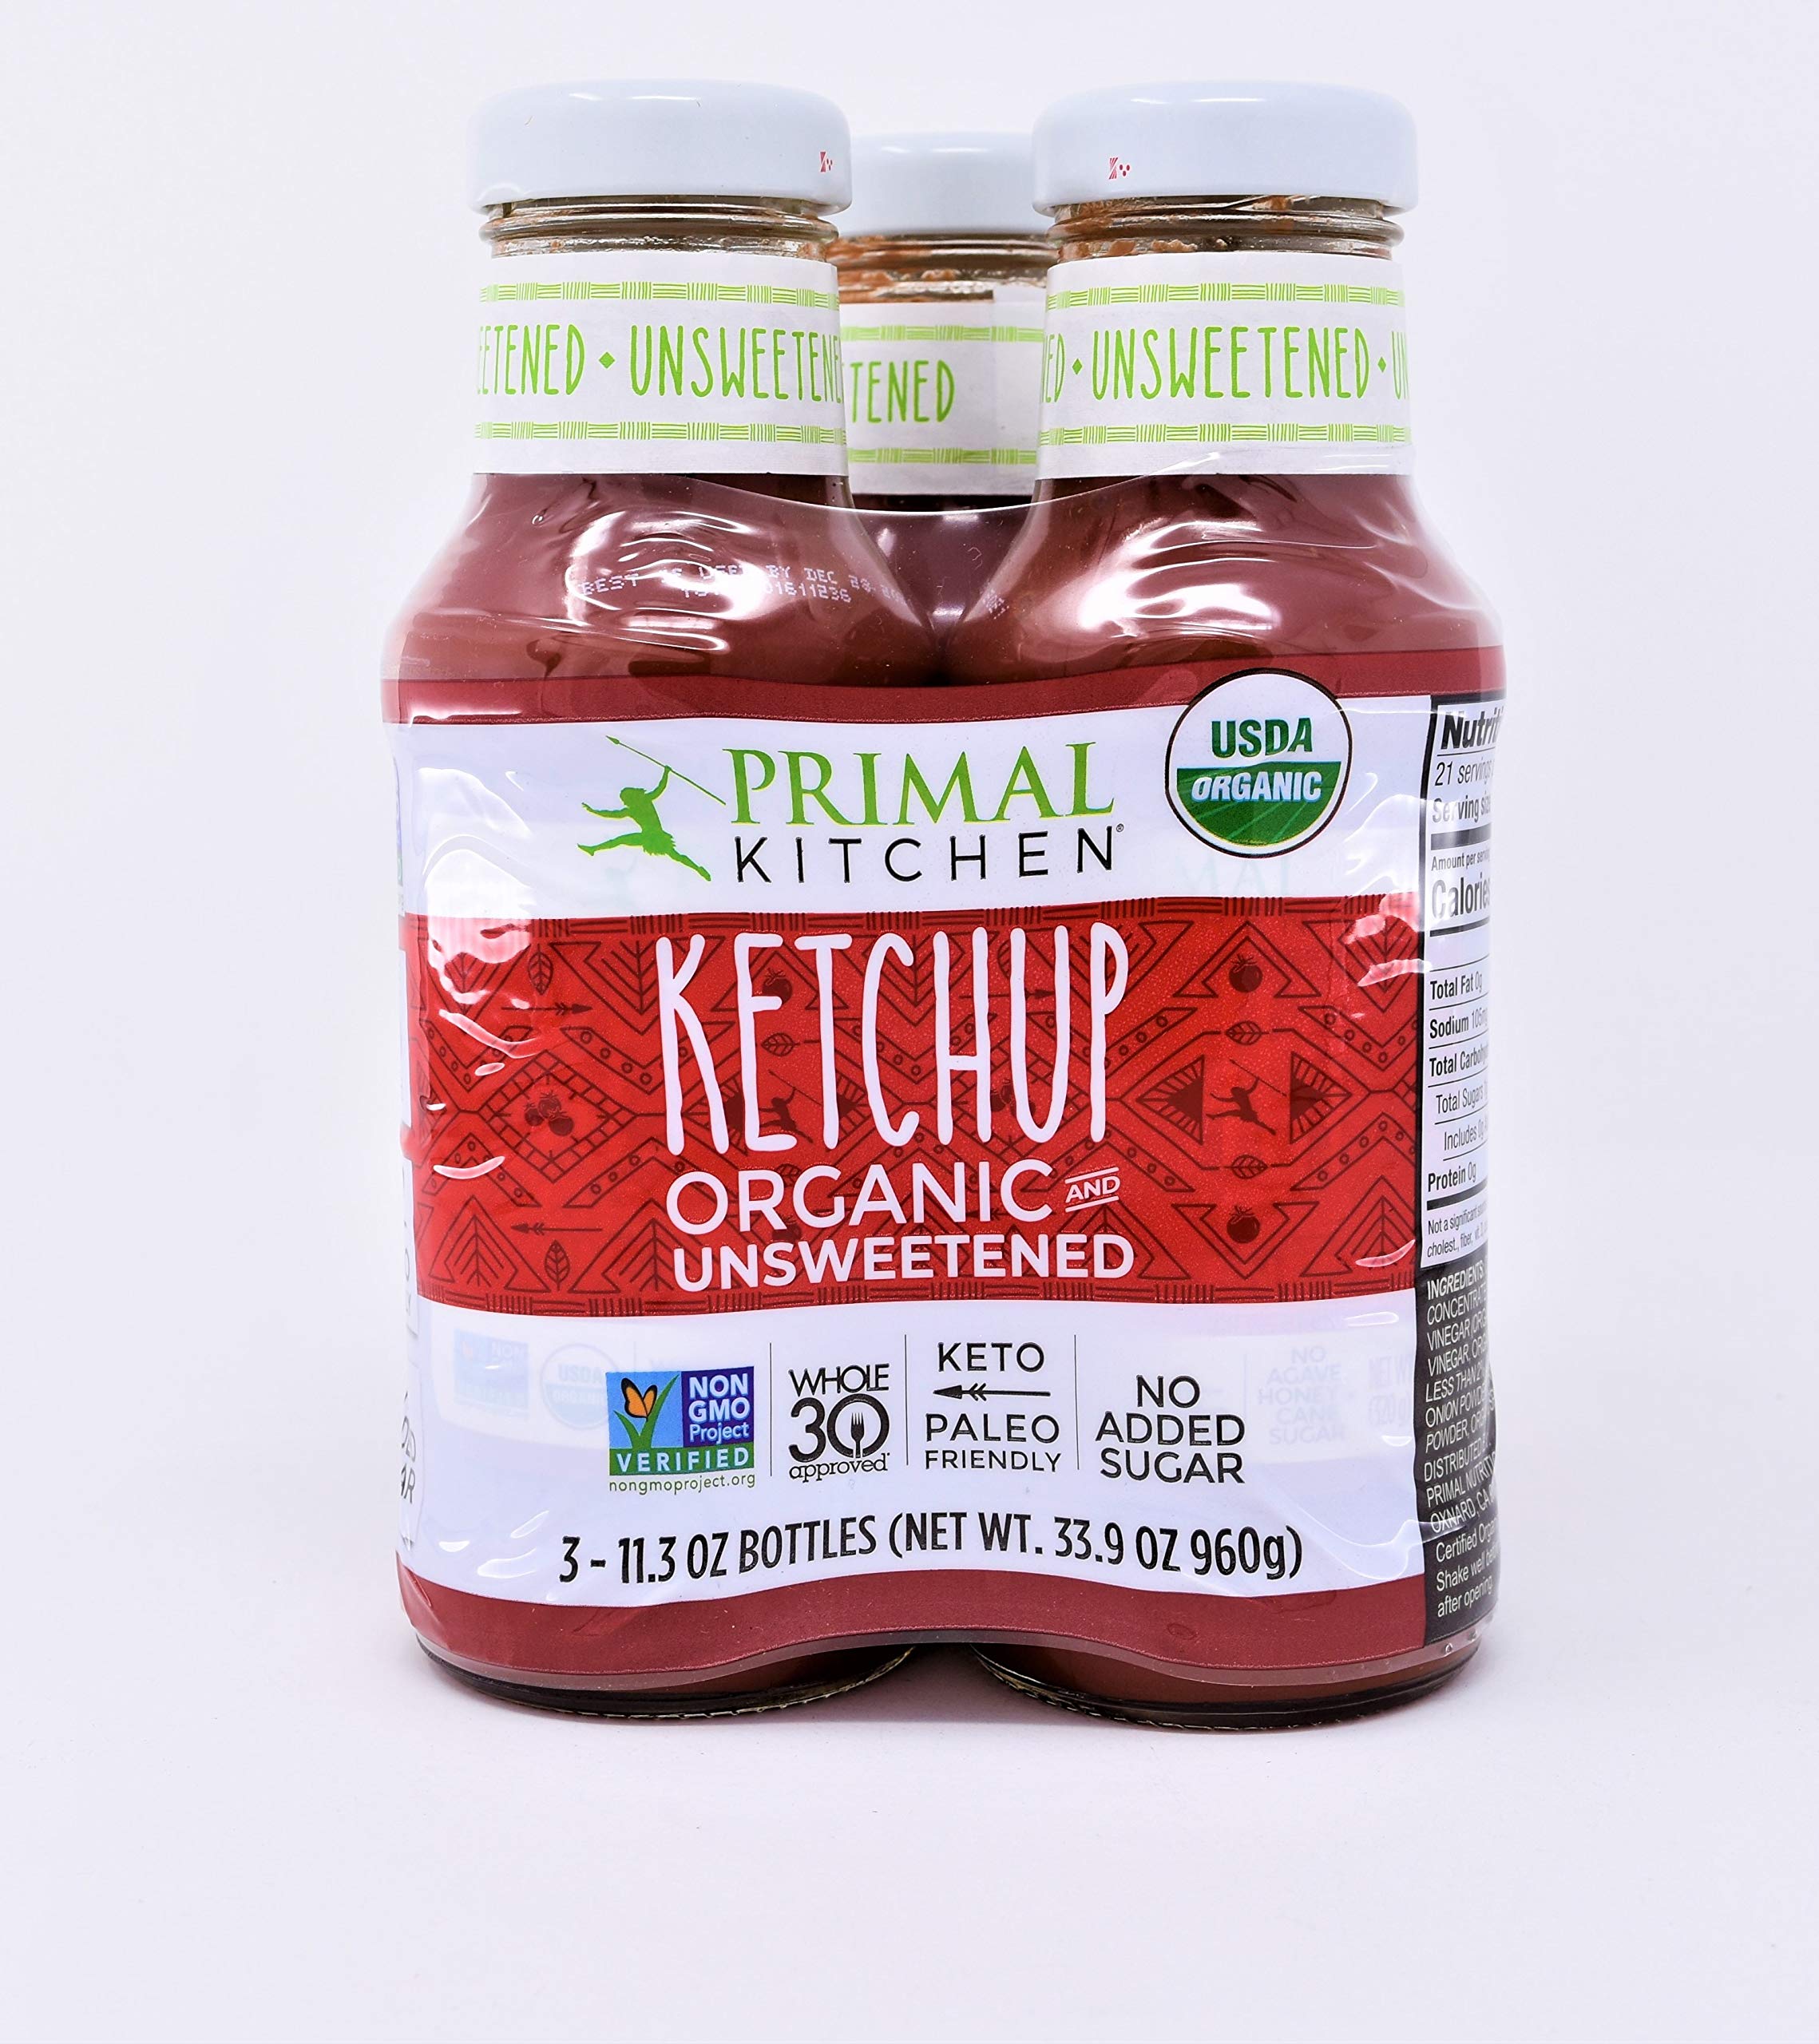 Primal Kitchen Organic Unsweetened Ketchup